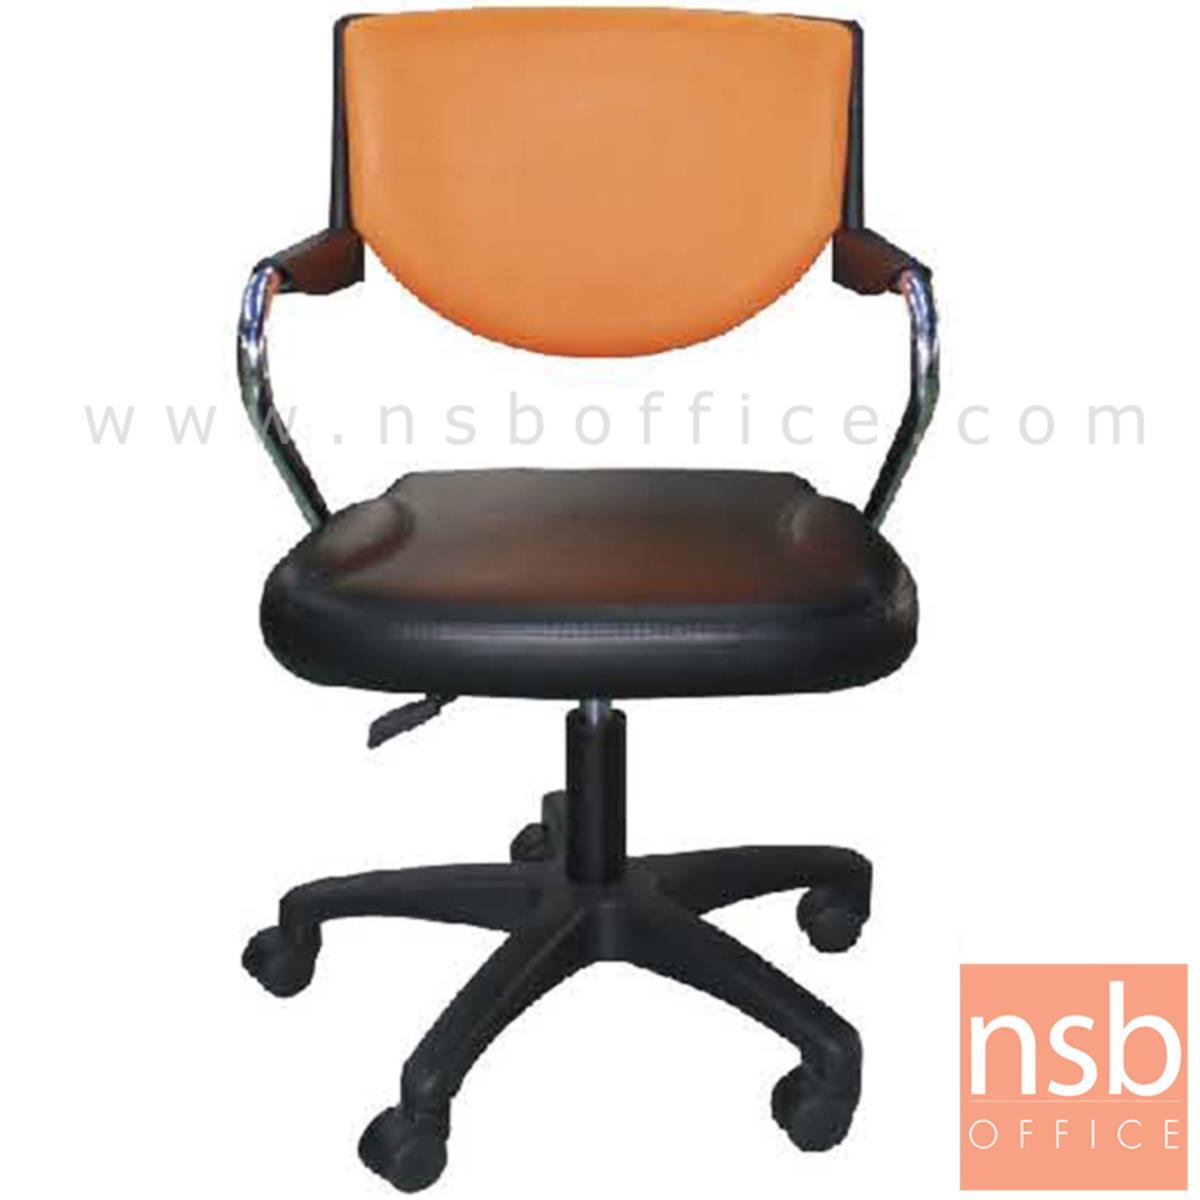 B03A396:เก้าอี้สำนักงาน รุ่น Weisstein (ไวส์สไตน์)  โช๊คแก๊ส ขาพลาสติก